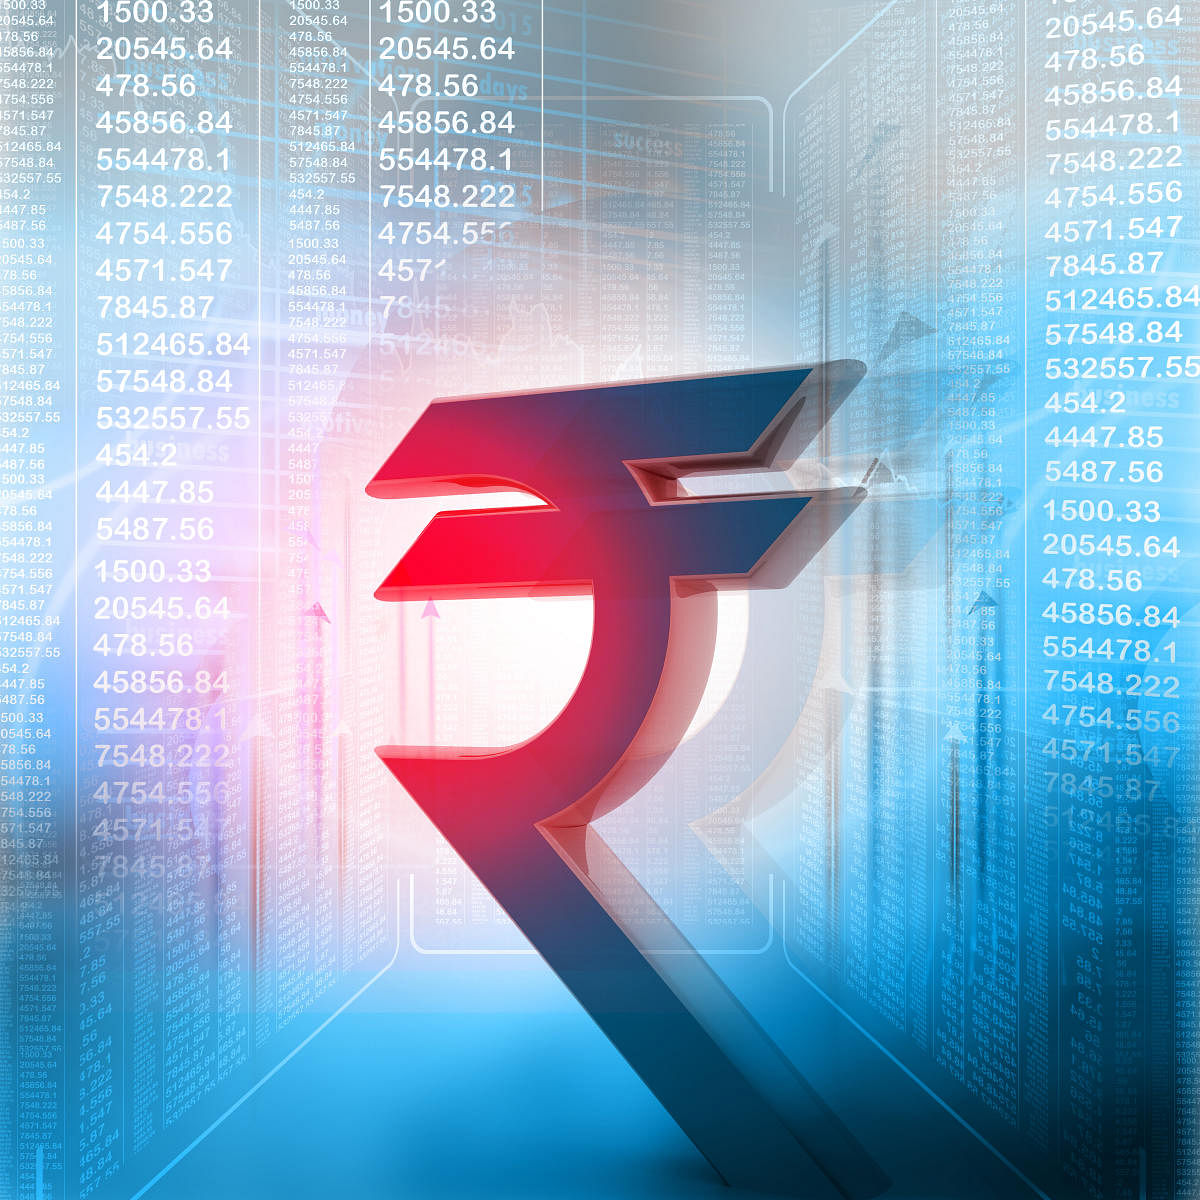 Indian rupee symbol (Getty image)